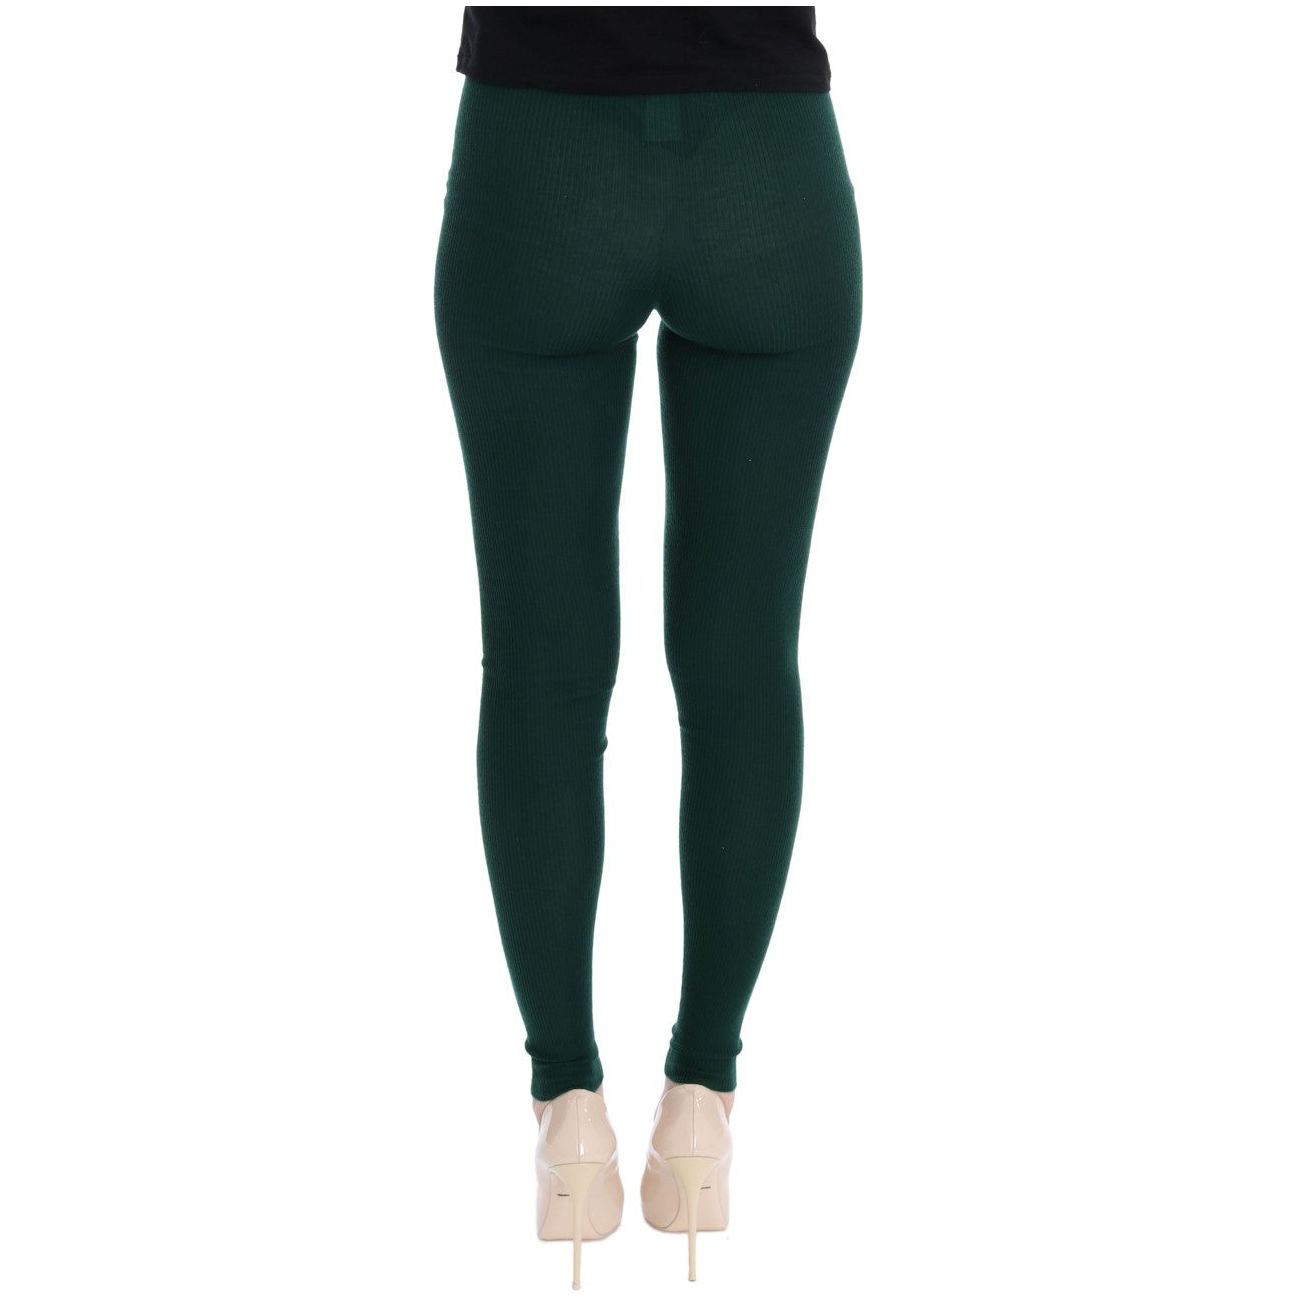 Dolce & Gabbana Elegant High-Waist Cashmere Tights Pants green-cashmere-stretch-tights